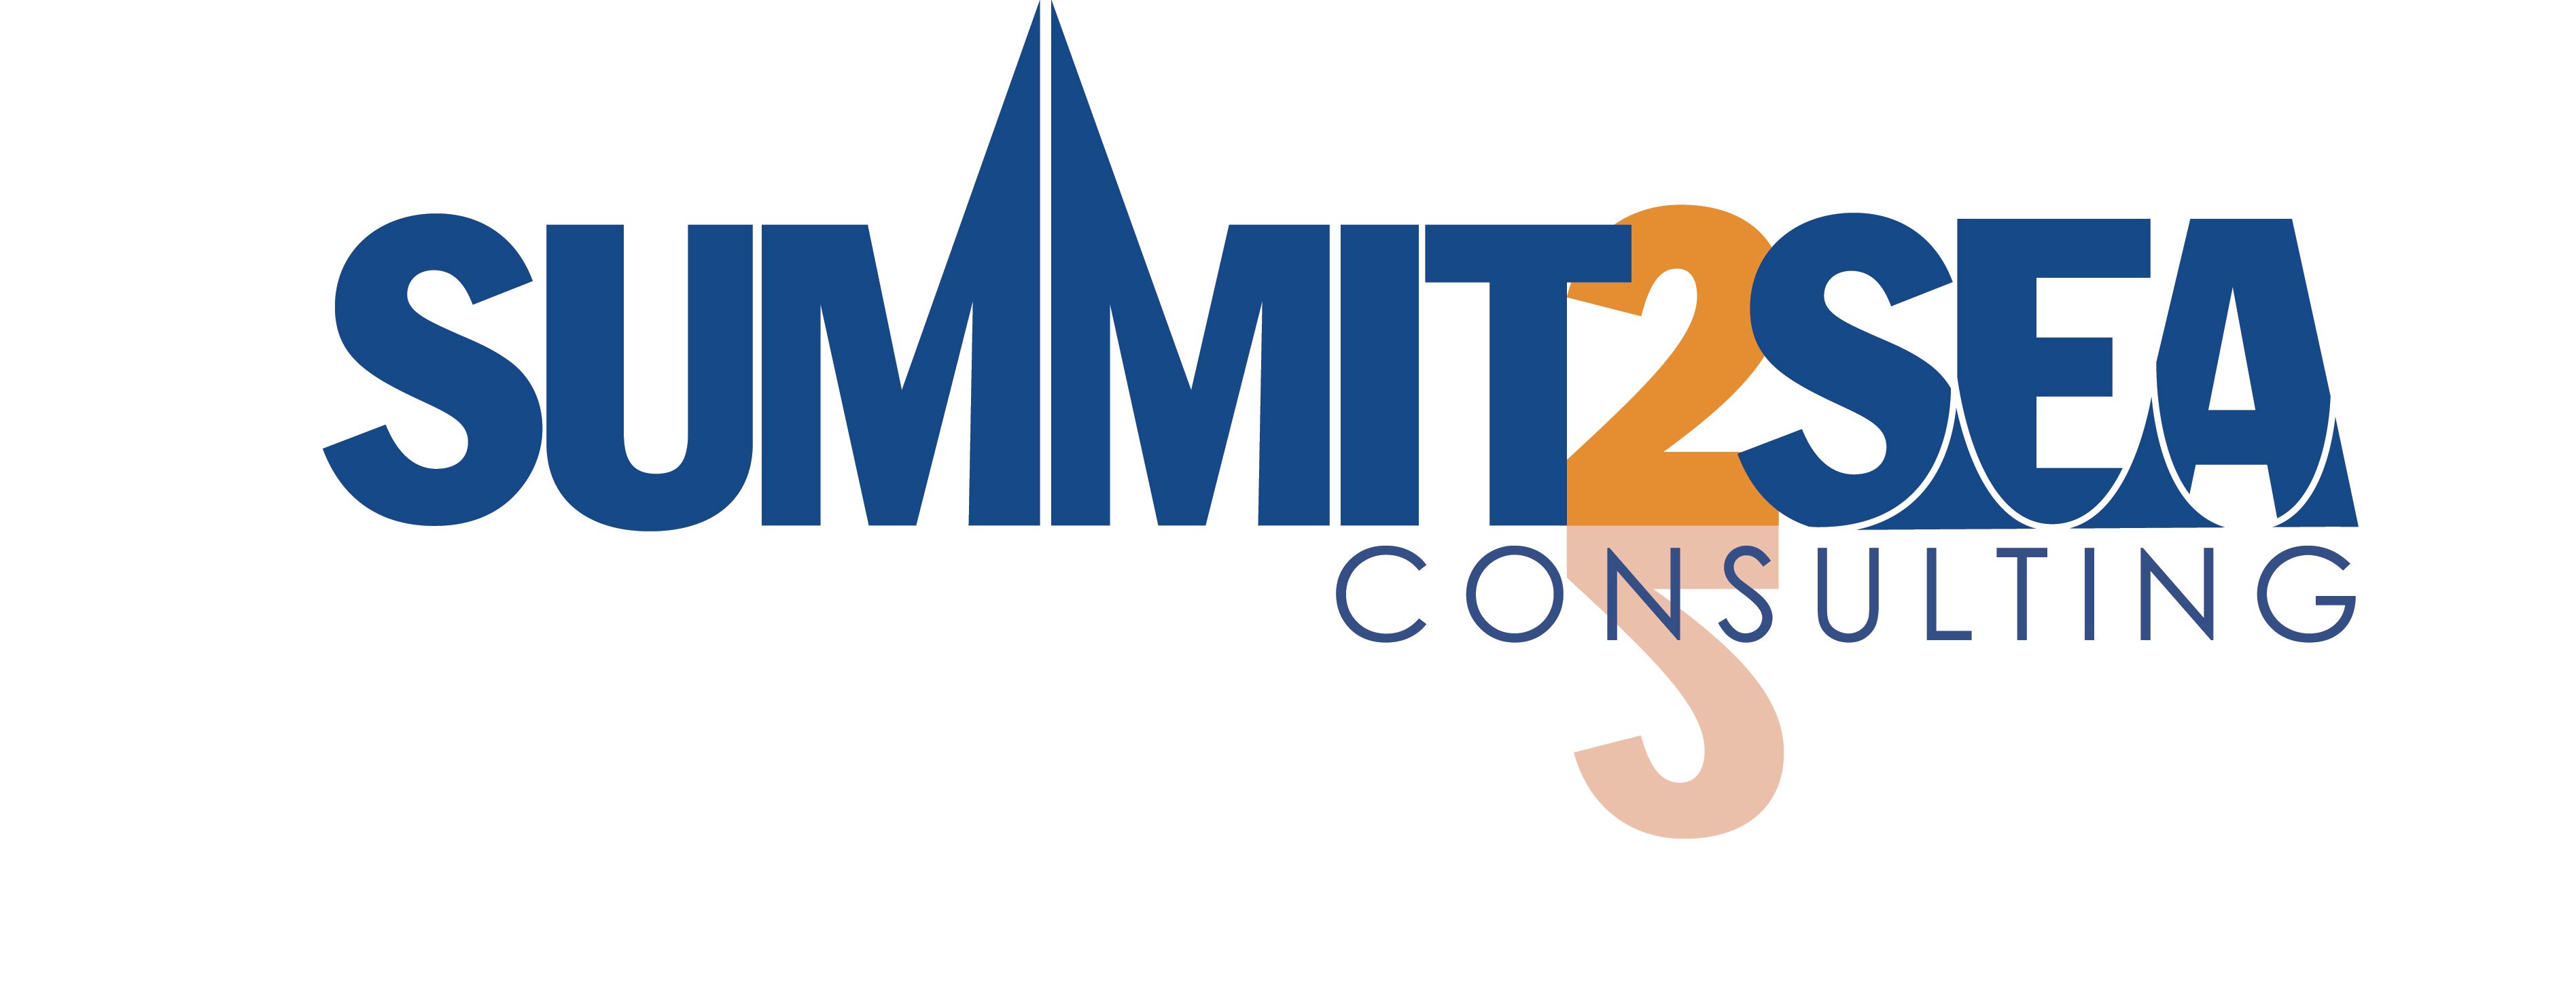 Summit2Sea logo